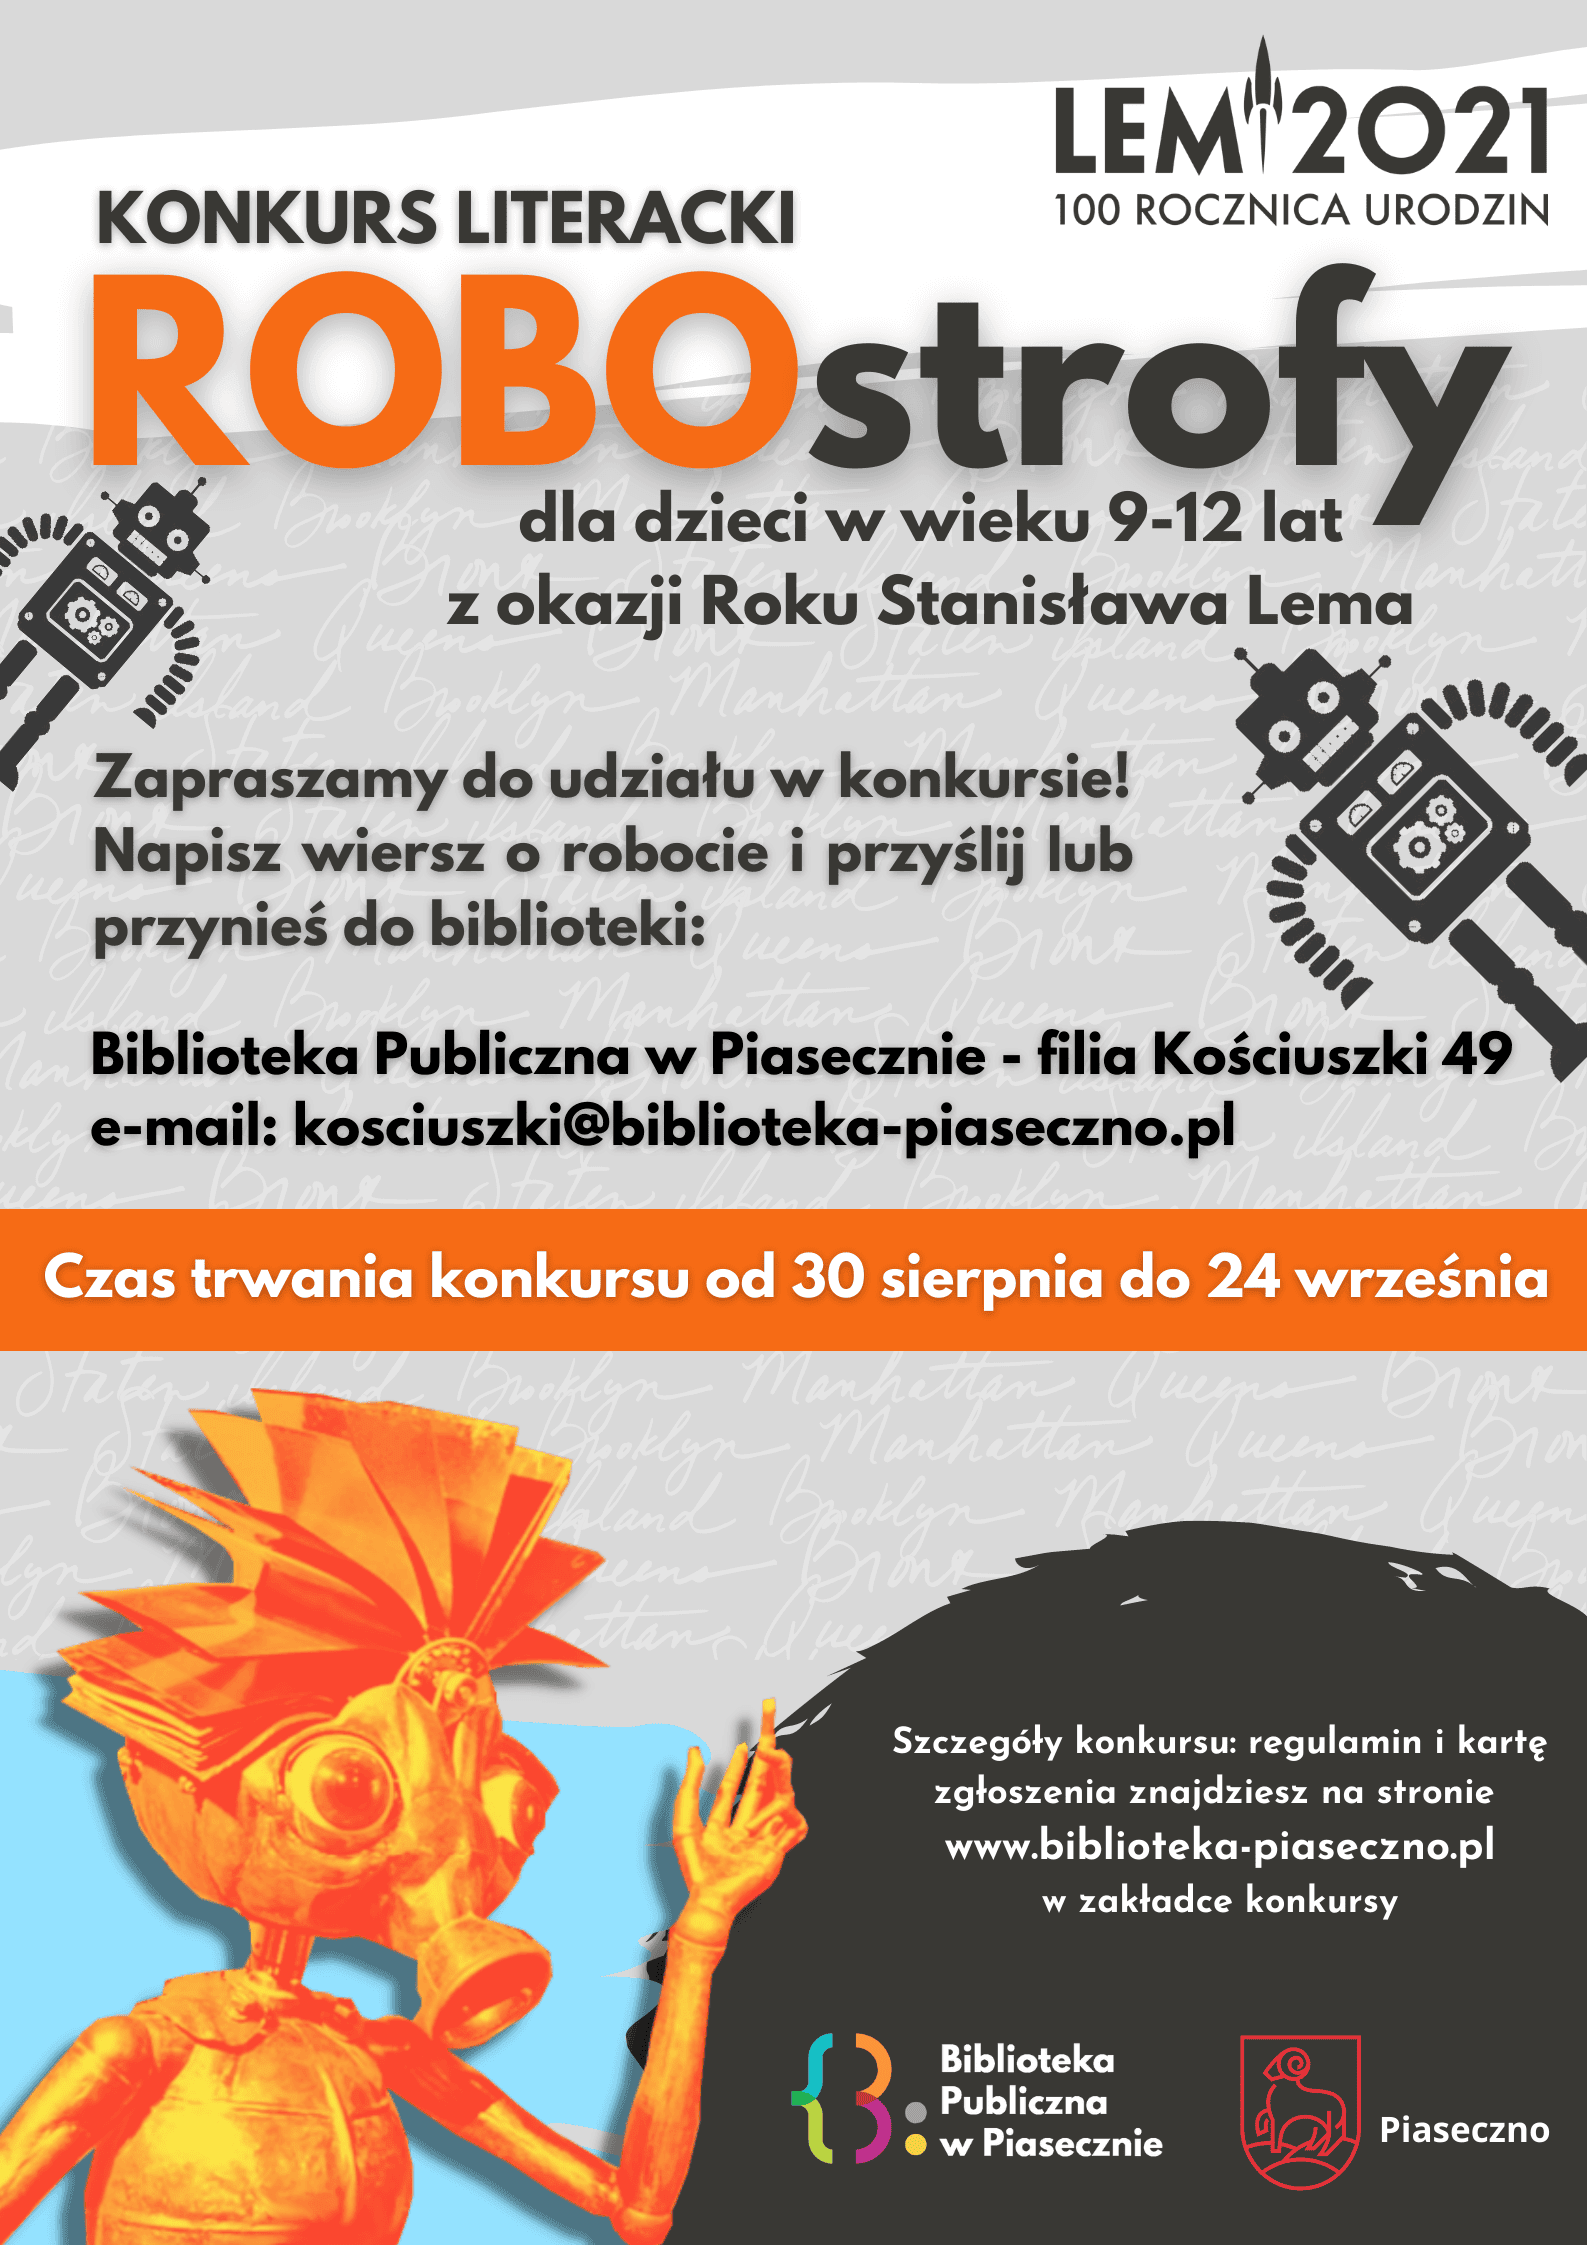 Plakat reklamujący konkurs literacki pt. Robostrofy